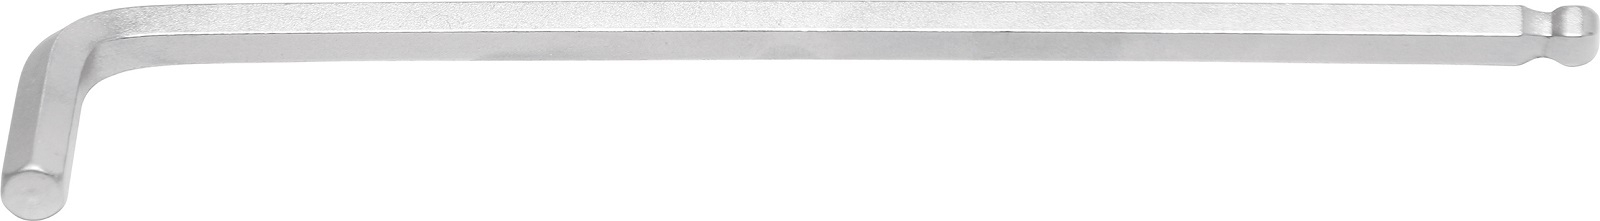 Winkelschlüssel | extra lang | Innensechskant/Innensechskant mit Kugelkopf 8 mm - BGS 790-8